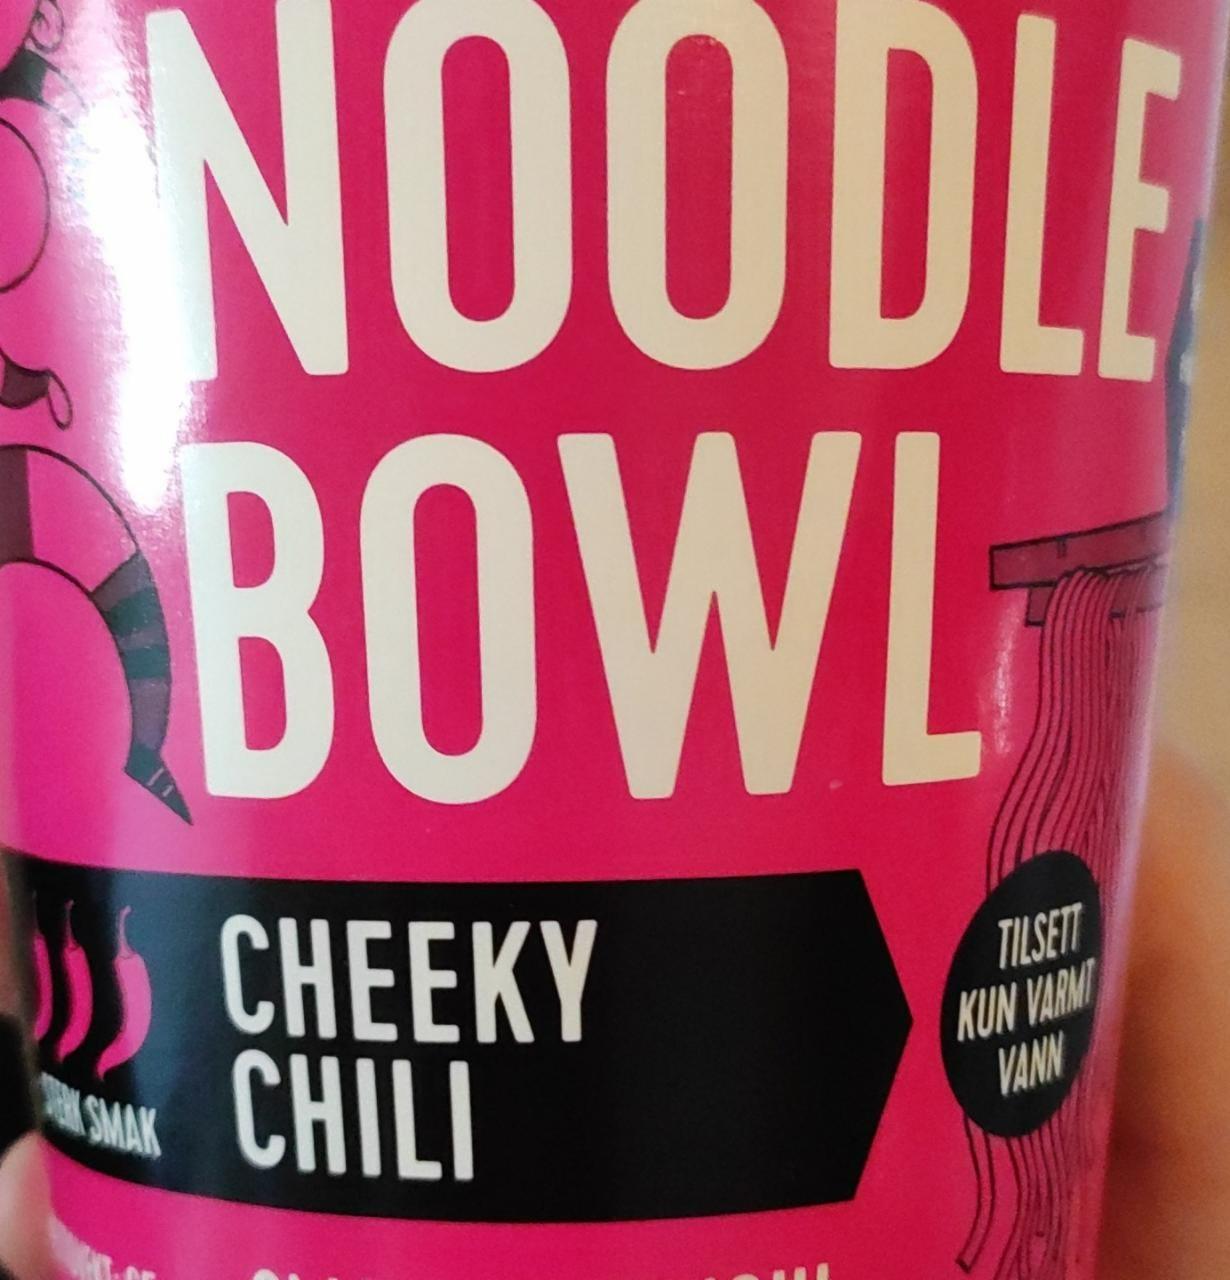 Fotografie - Noodle bowl Cheeky chili Eldorado